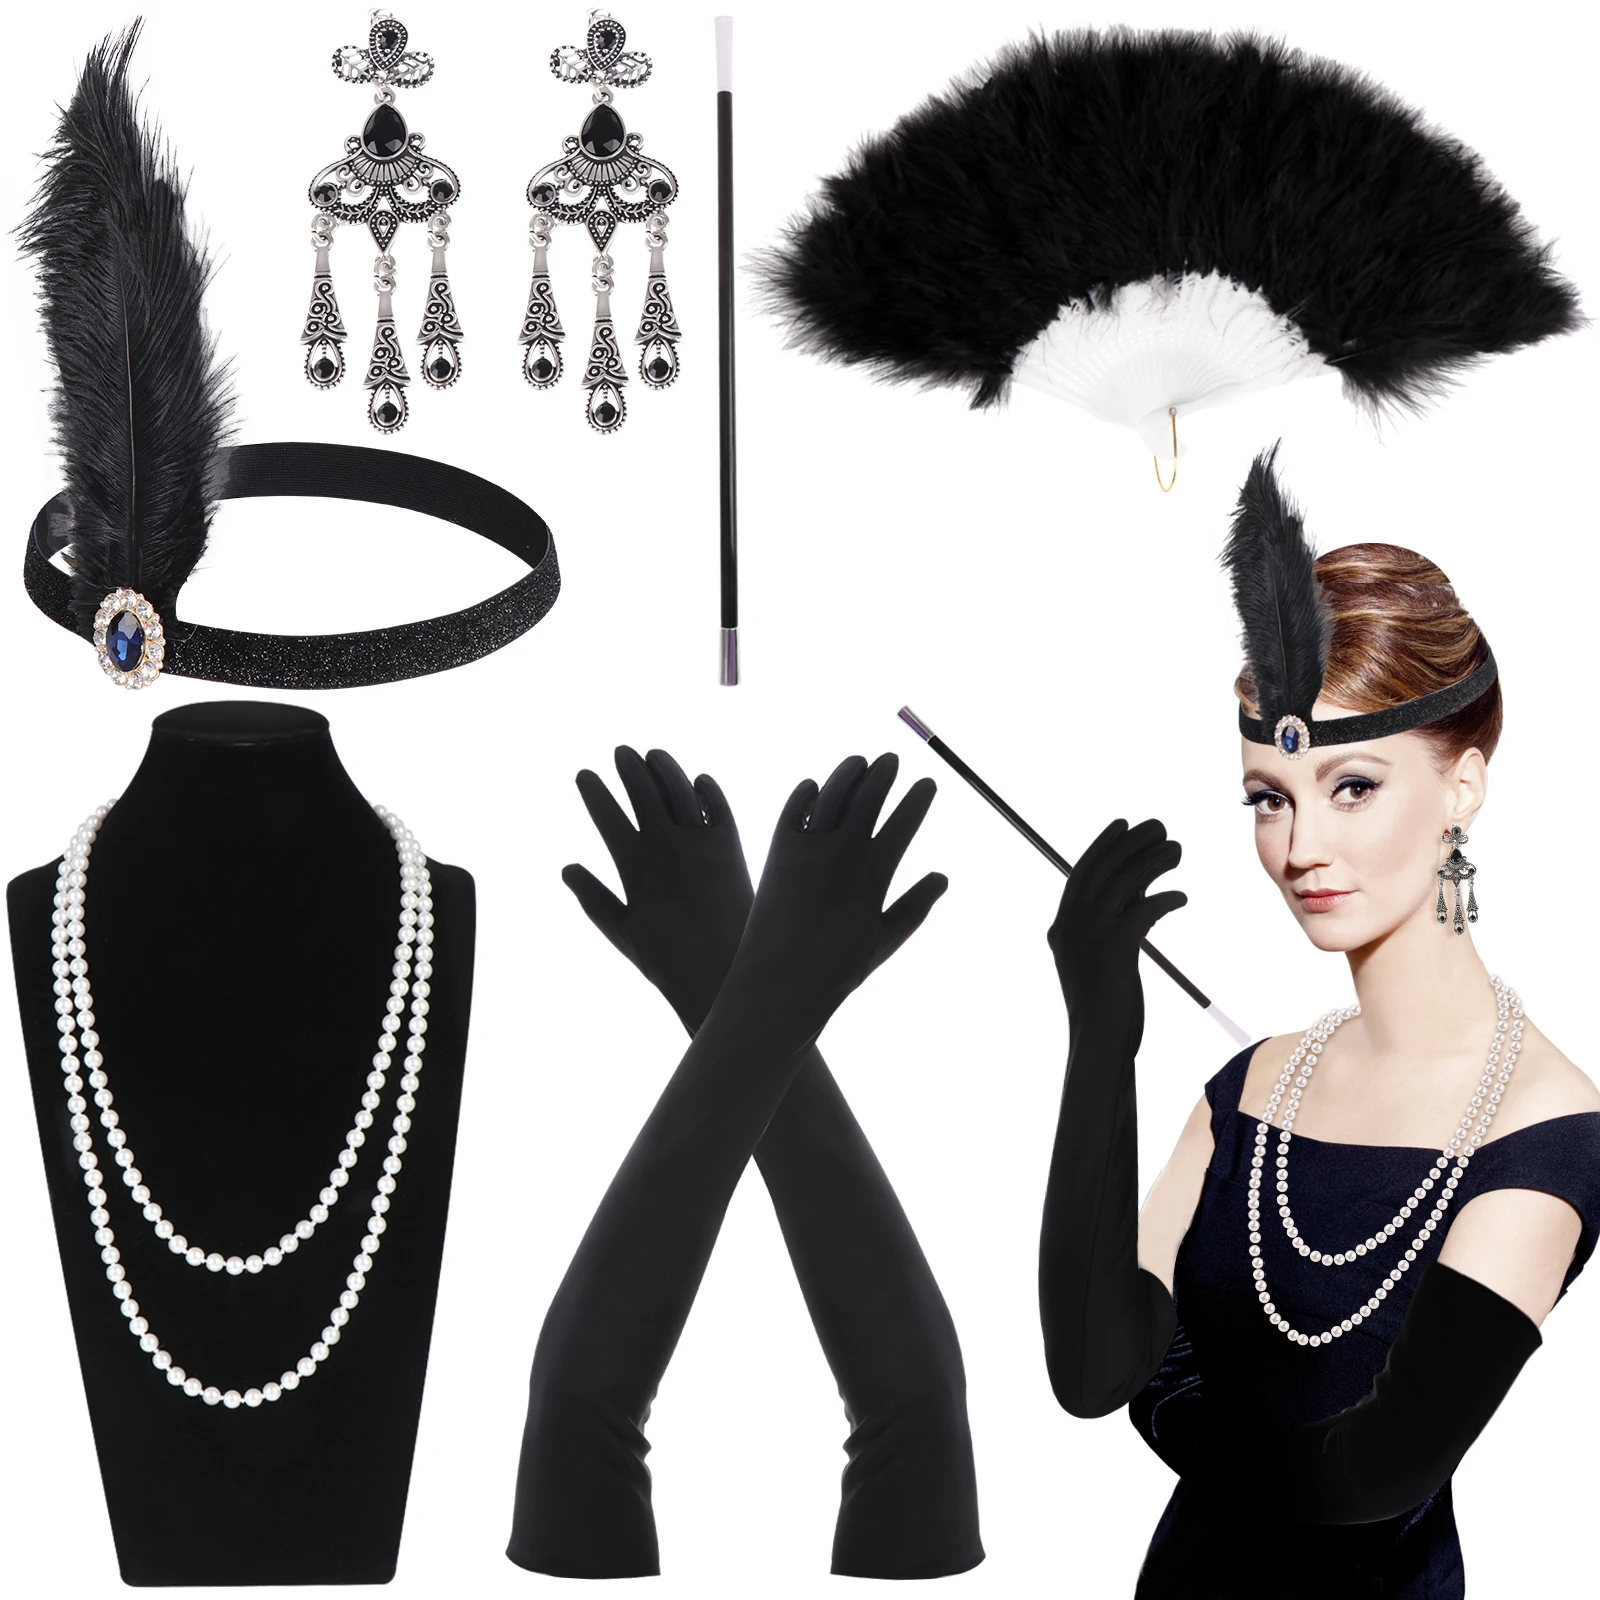 

Women's Black Feather Crystal Headband Fashion New Women Girls Hairwear Vintage Ladies Party Props Dress Accessories